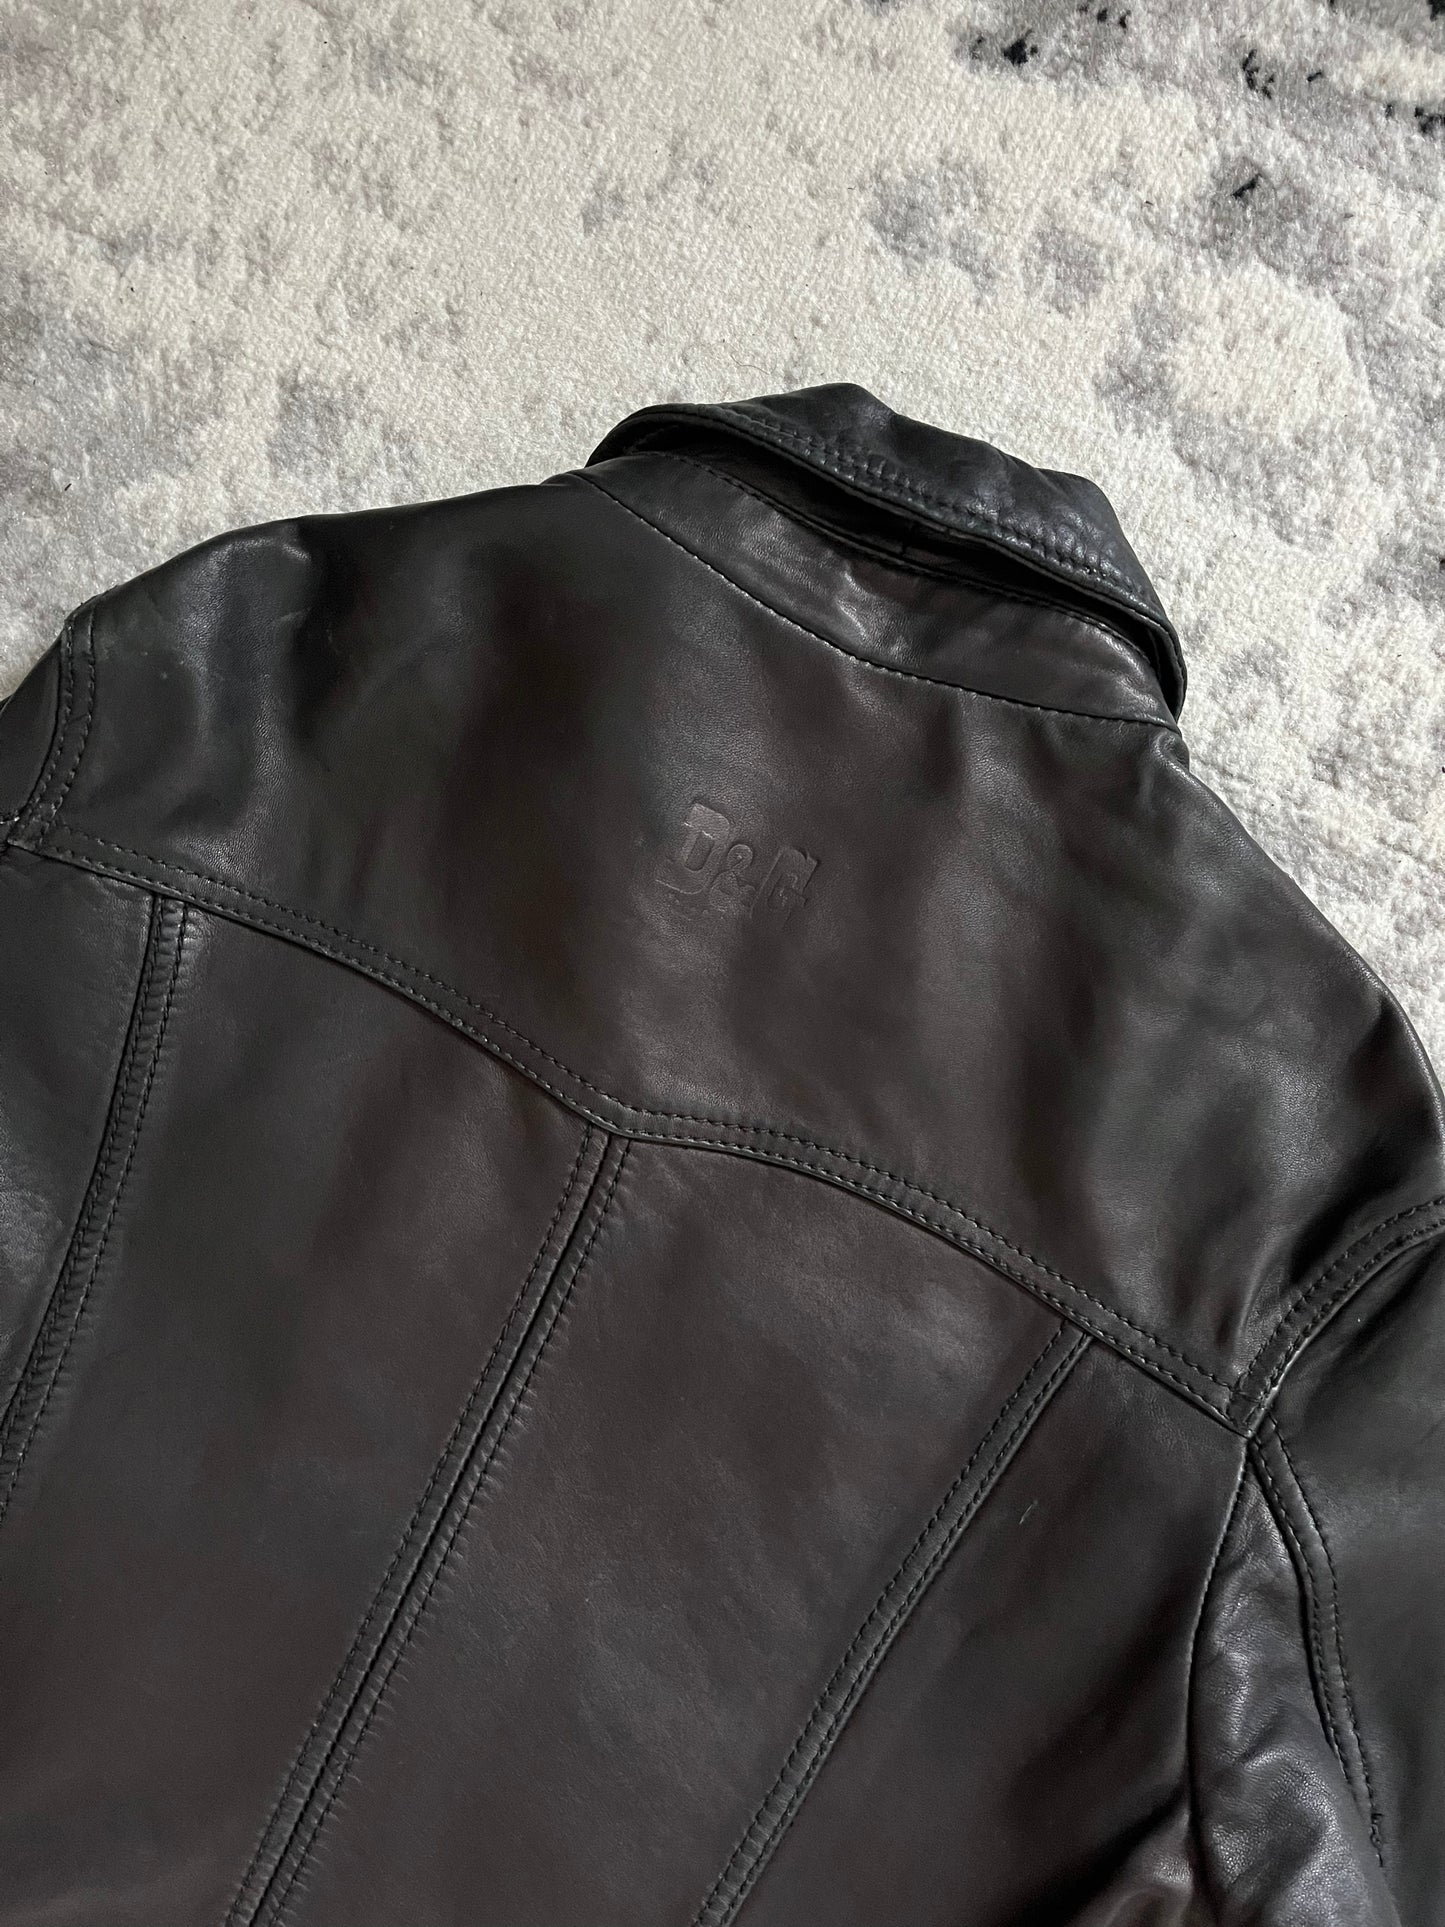 00s Dolce & Gabbana Black Rebel Utility Leather Jacket (S/M)